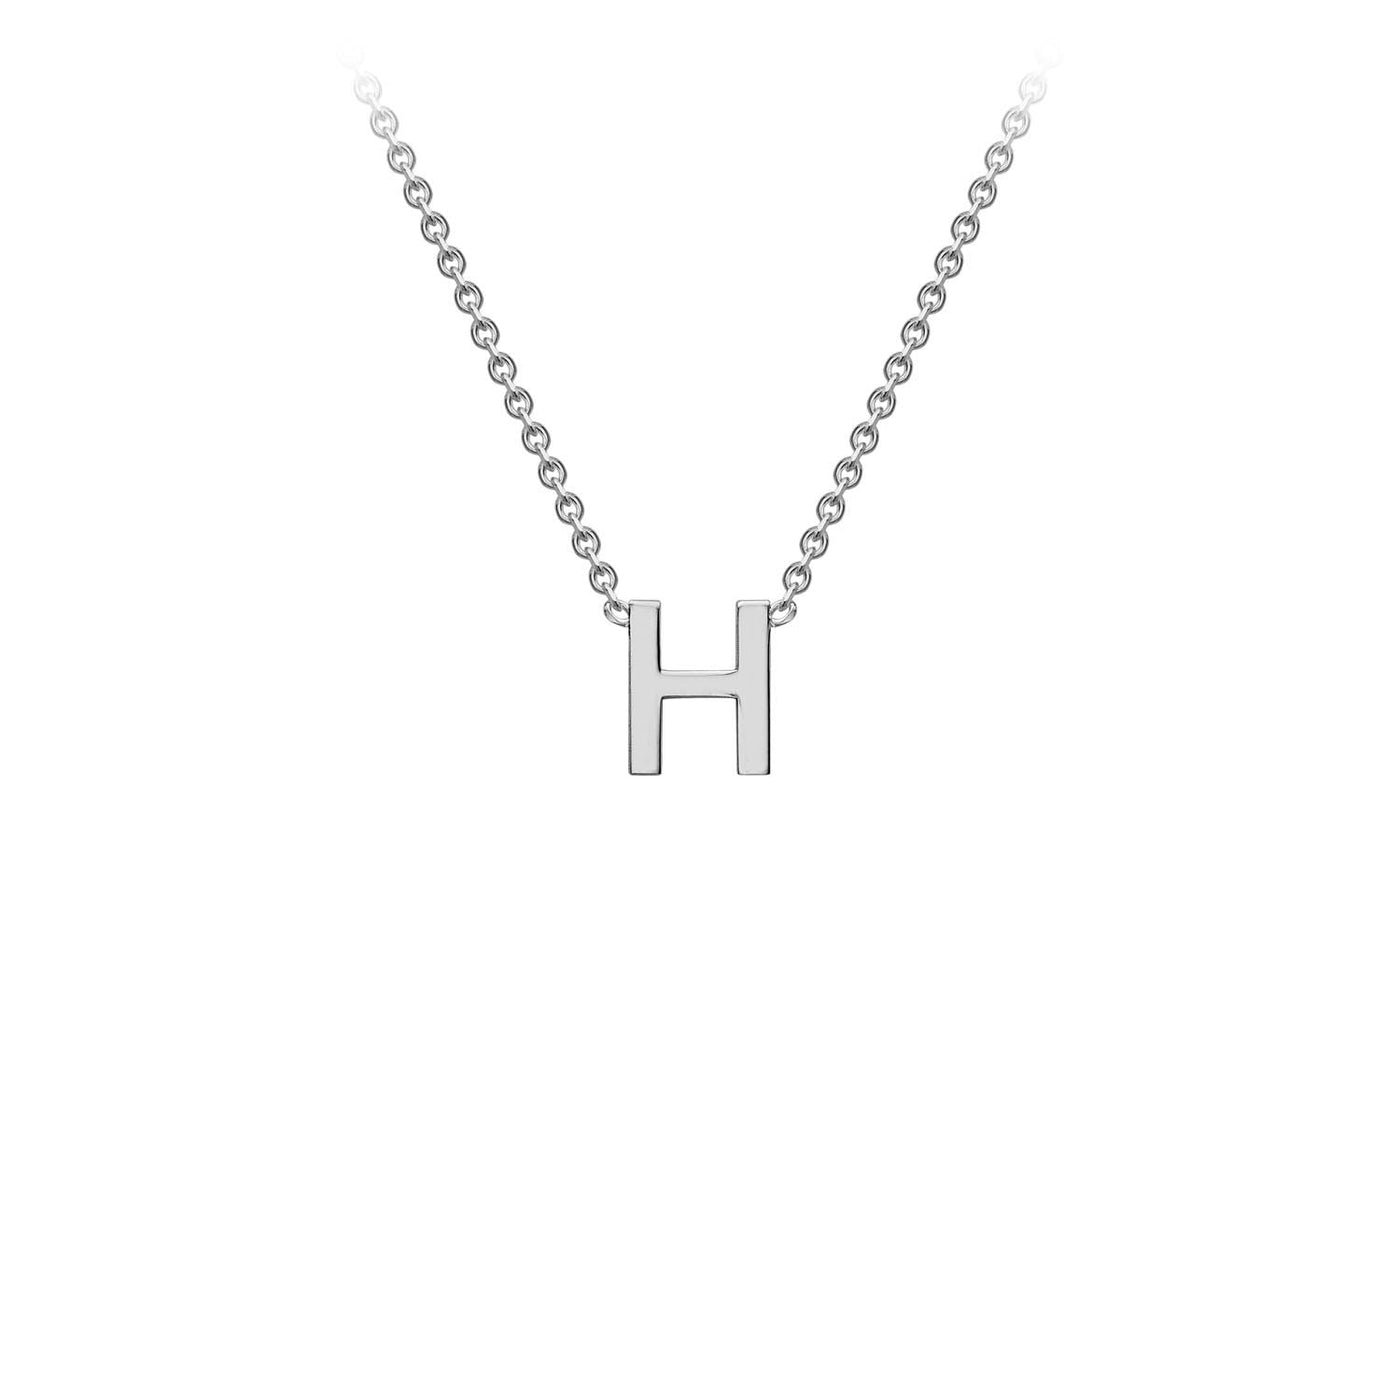 9K White Gold 'H' Initial Adjustable Letter Necklace 38/43cm